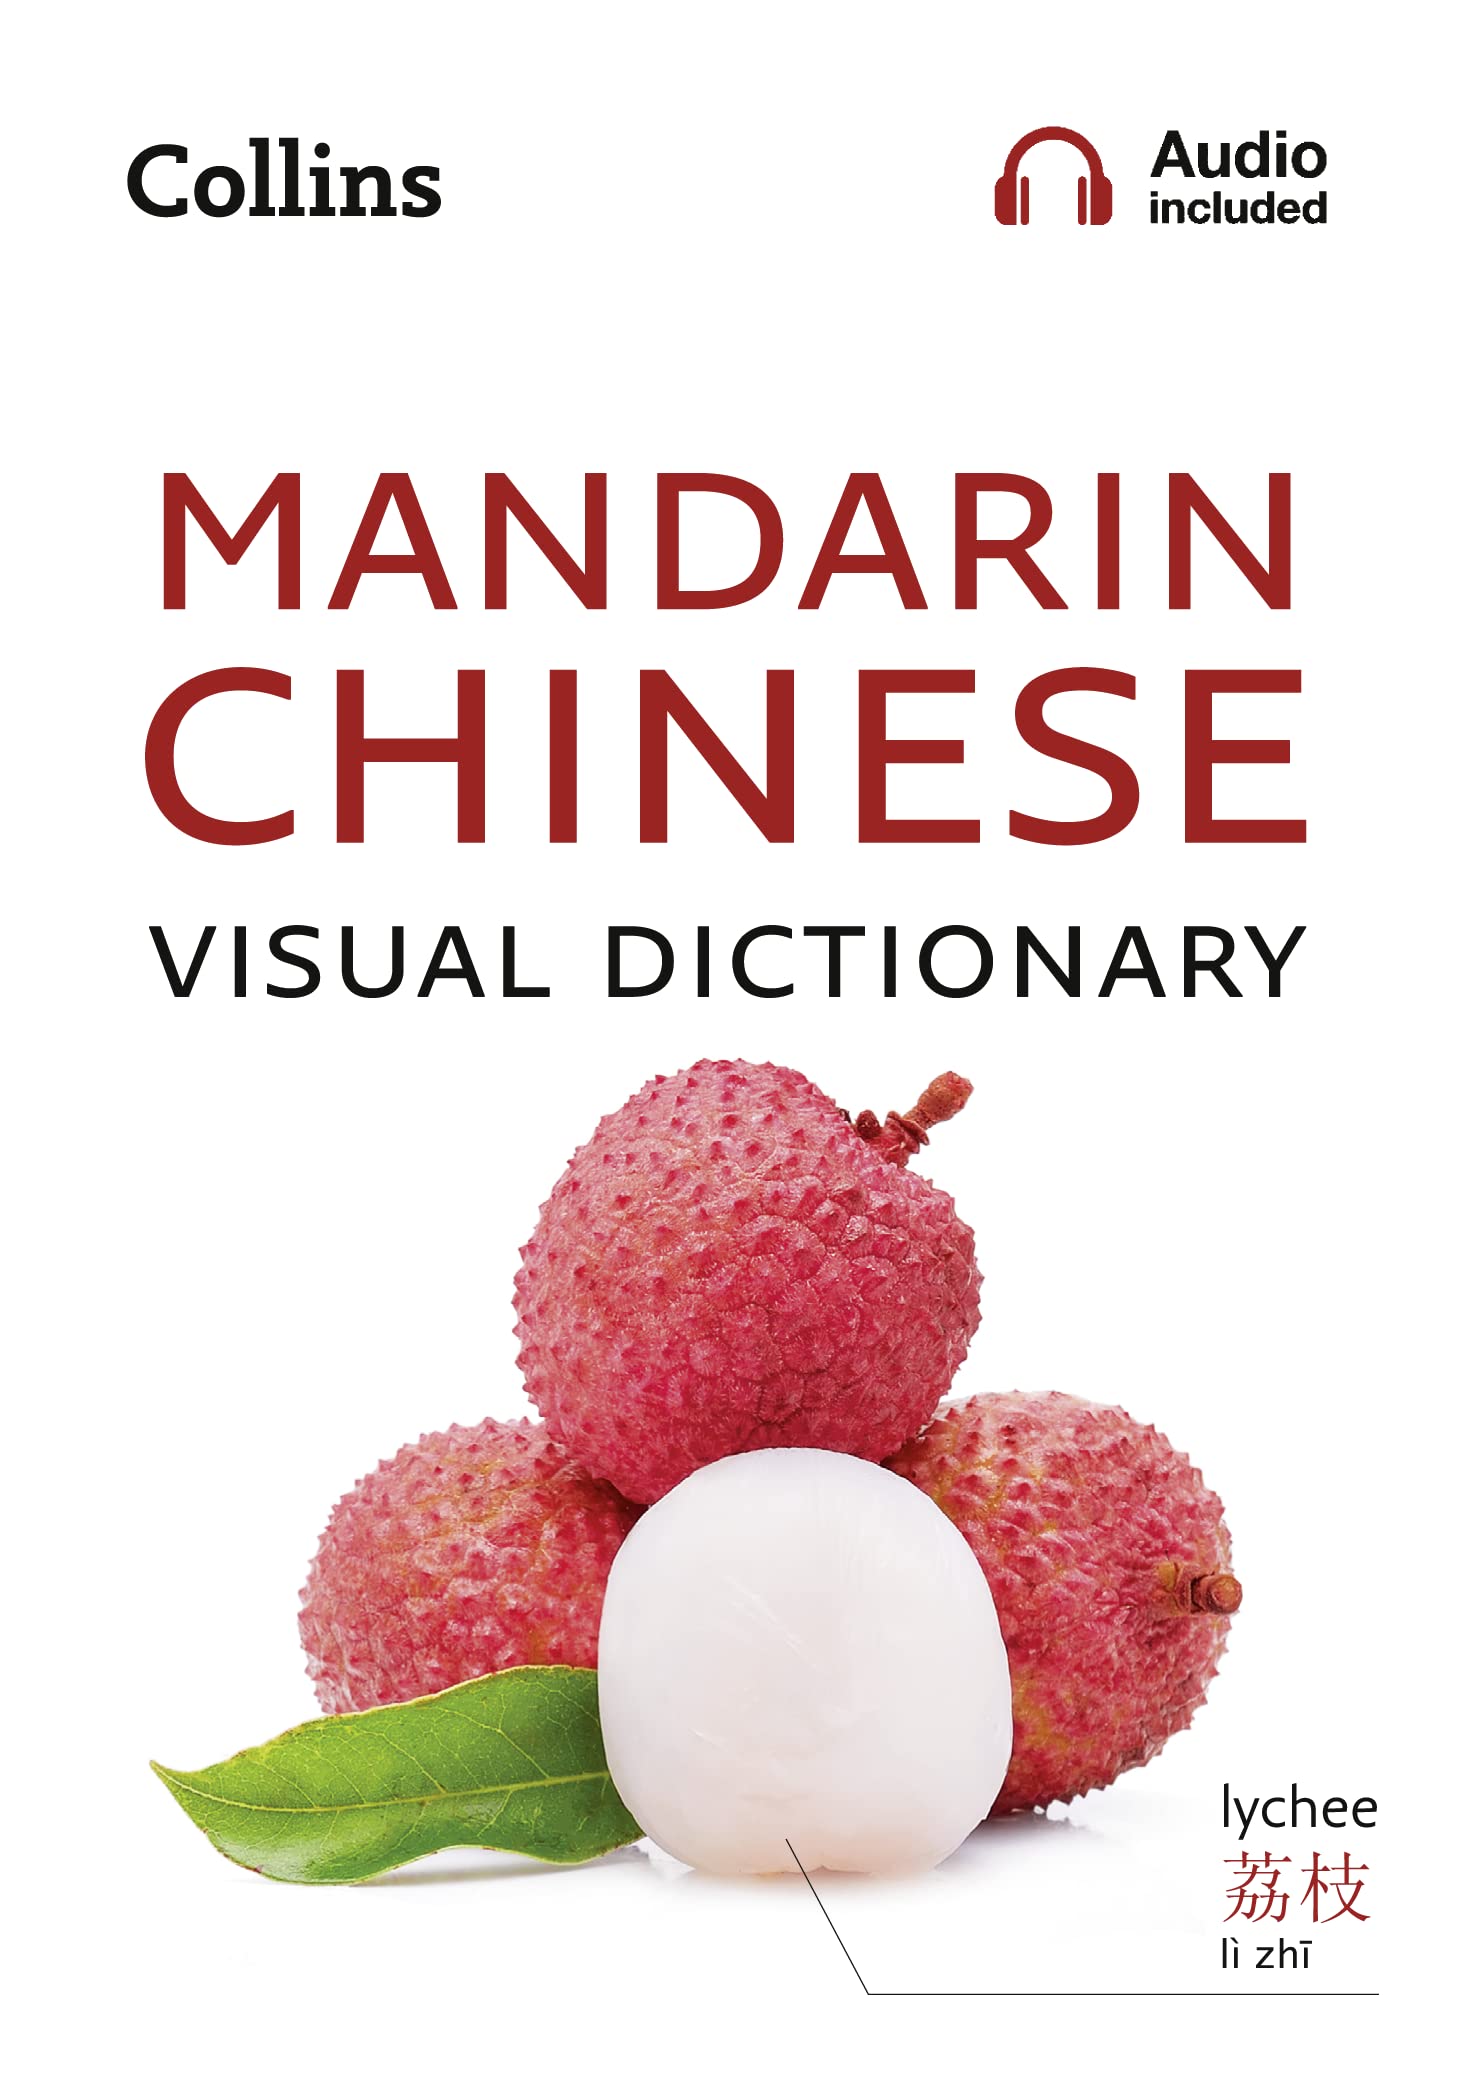 Collins Visual Dictionary: Mandarin